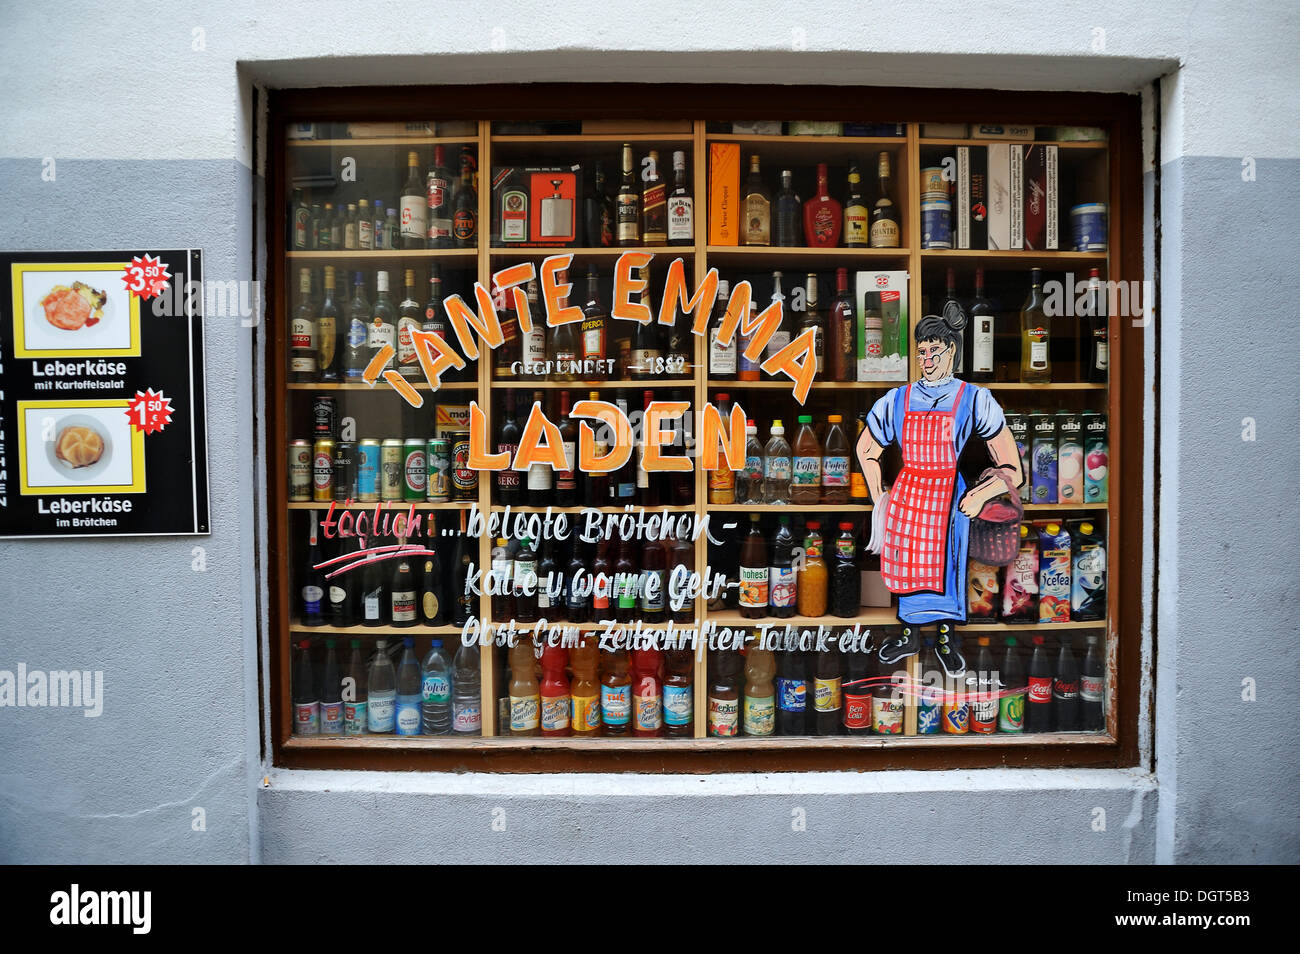 Shop window of a 'Tante Emma Laden', German for 'small corner shop', displaying bottles, historic center, Nuremberg Stock Photo